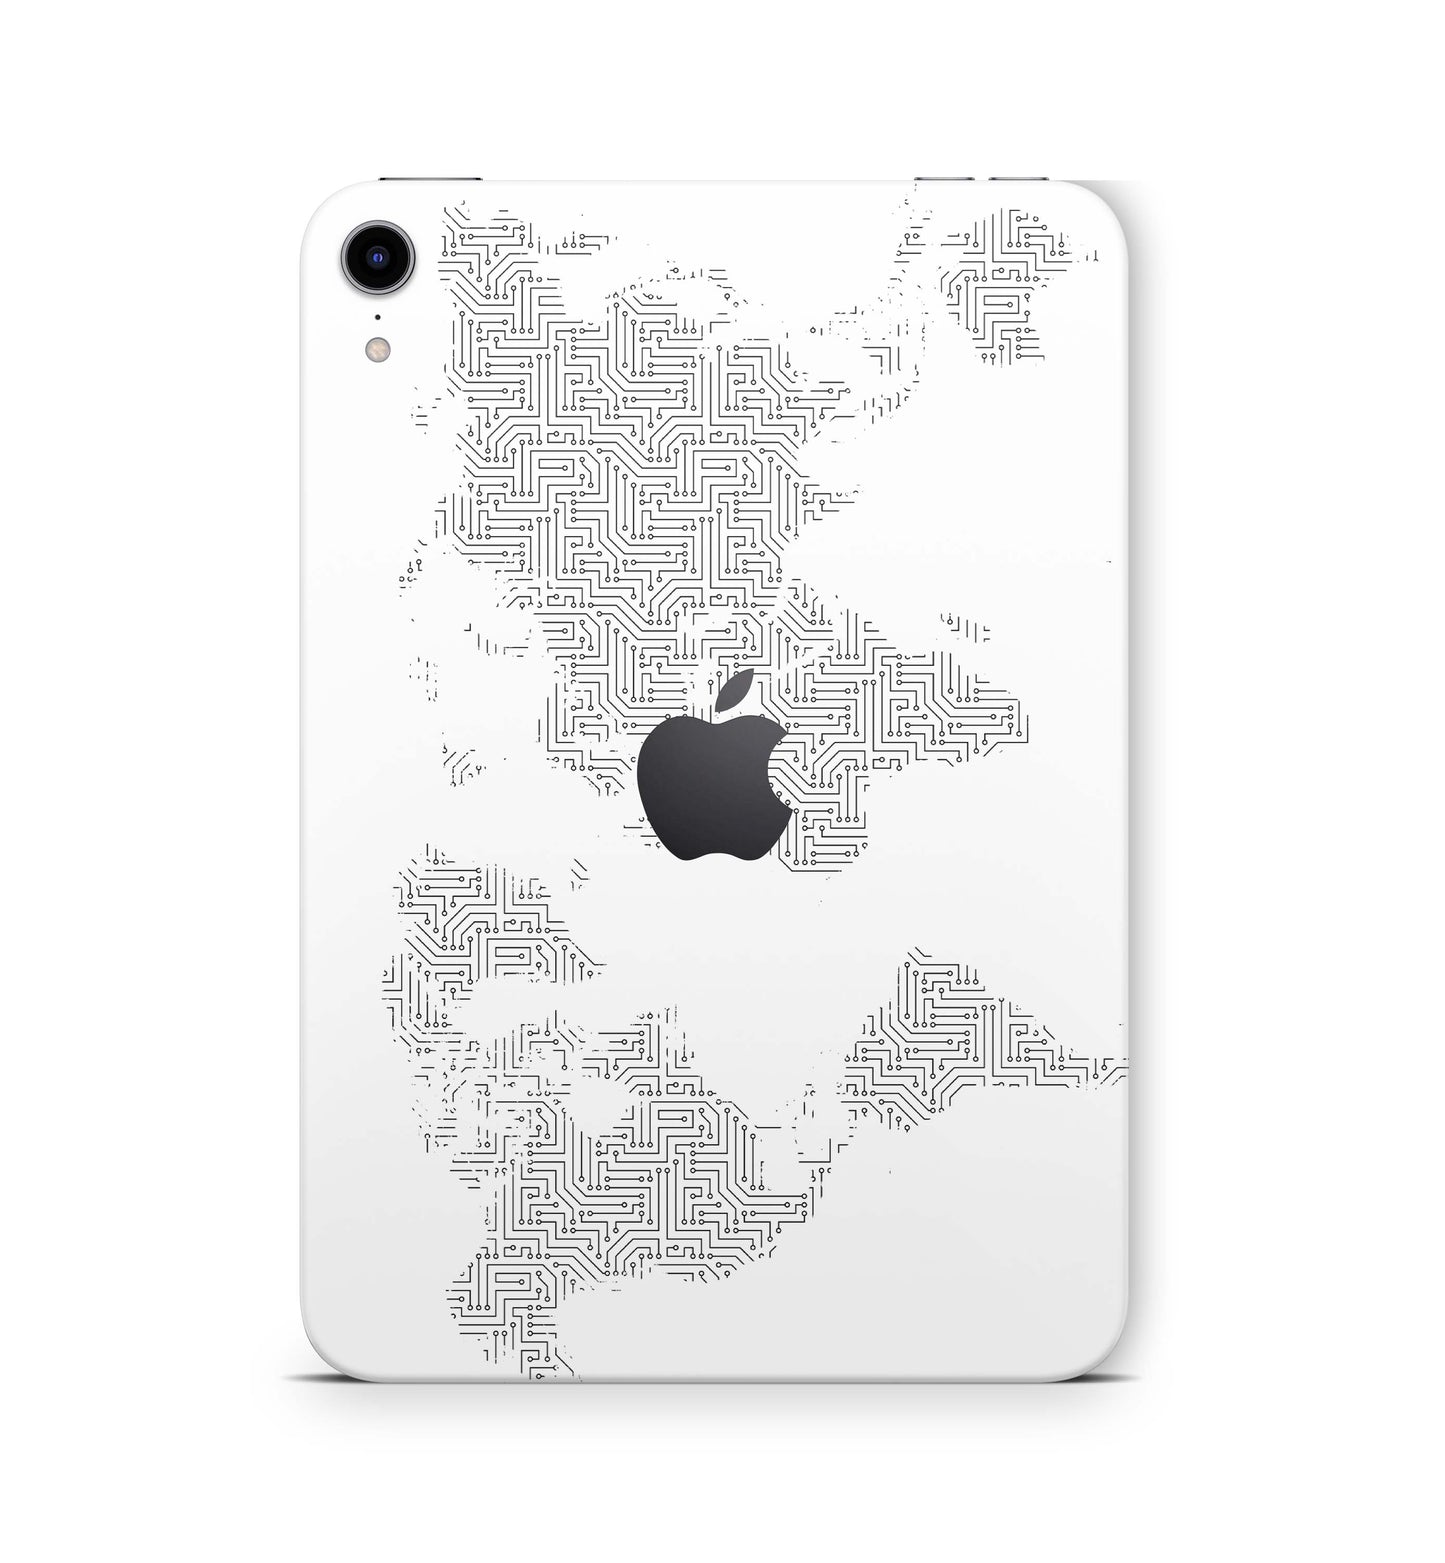 iPad Air Skin Design Cover Folie Vinyl Skins & Wraps für alle iPad Air Modelle Aufkleber Skins4u Weltkarte  